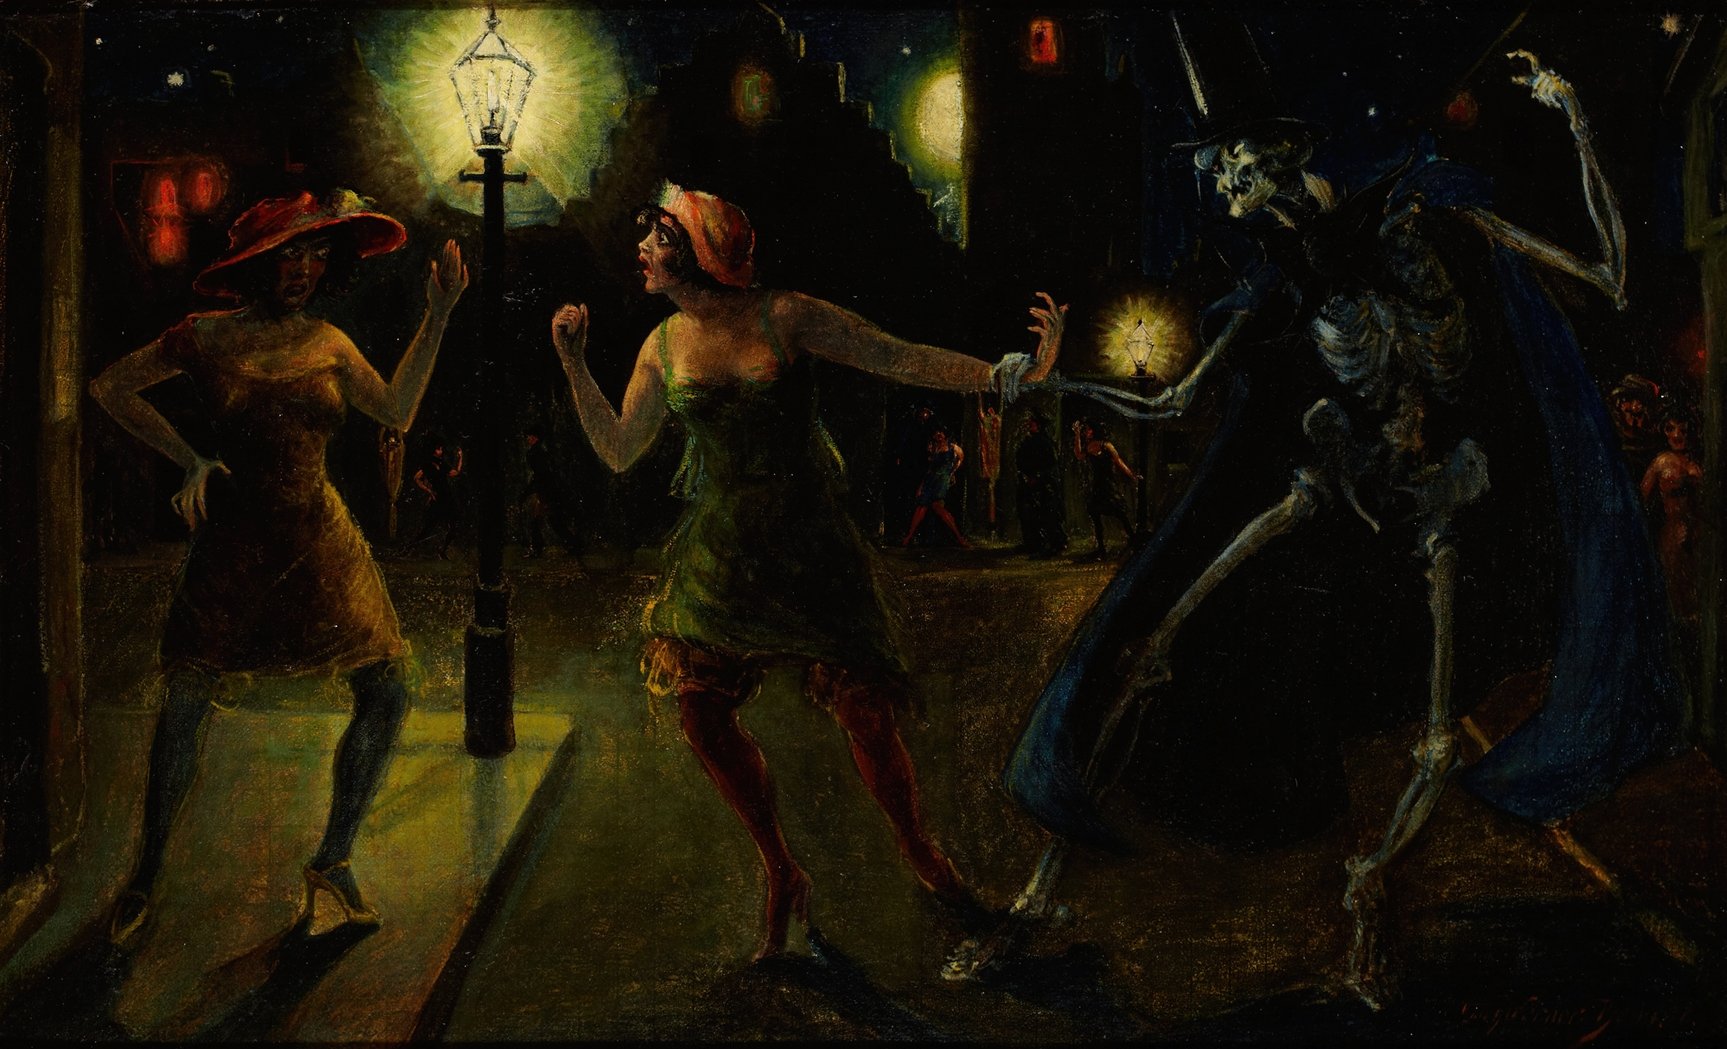 Dance of Death (1926)